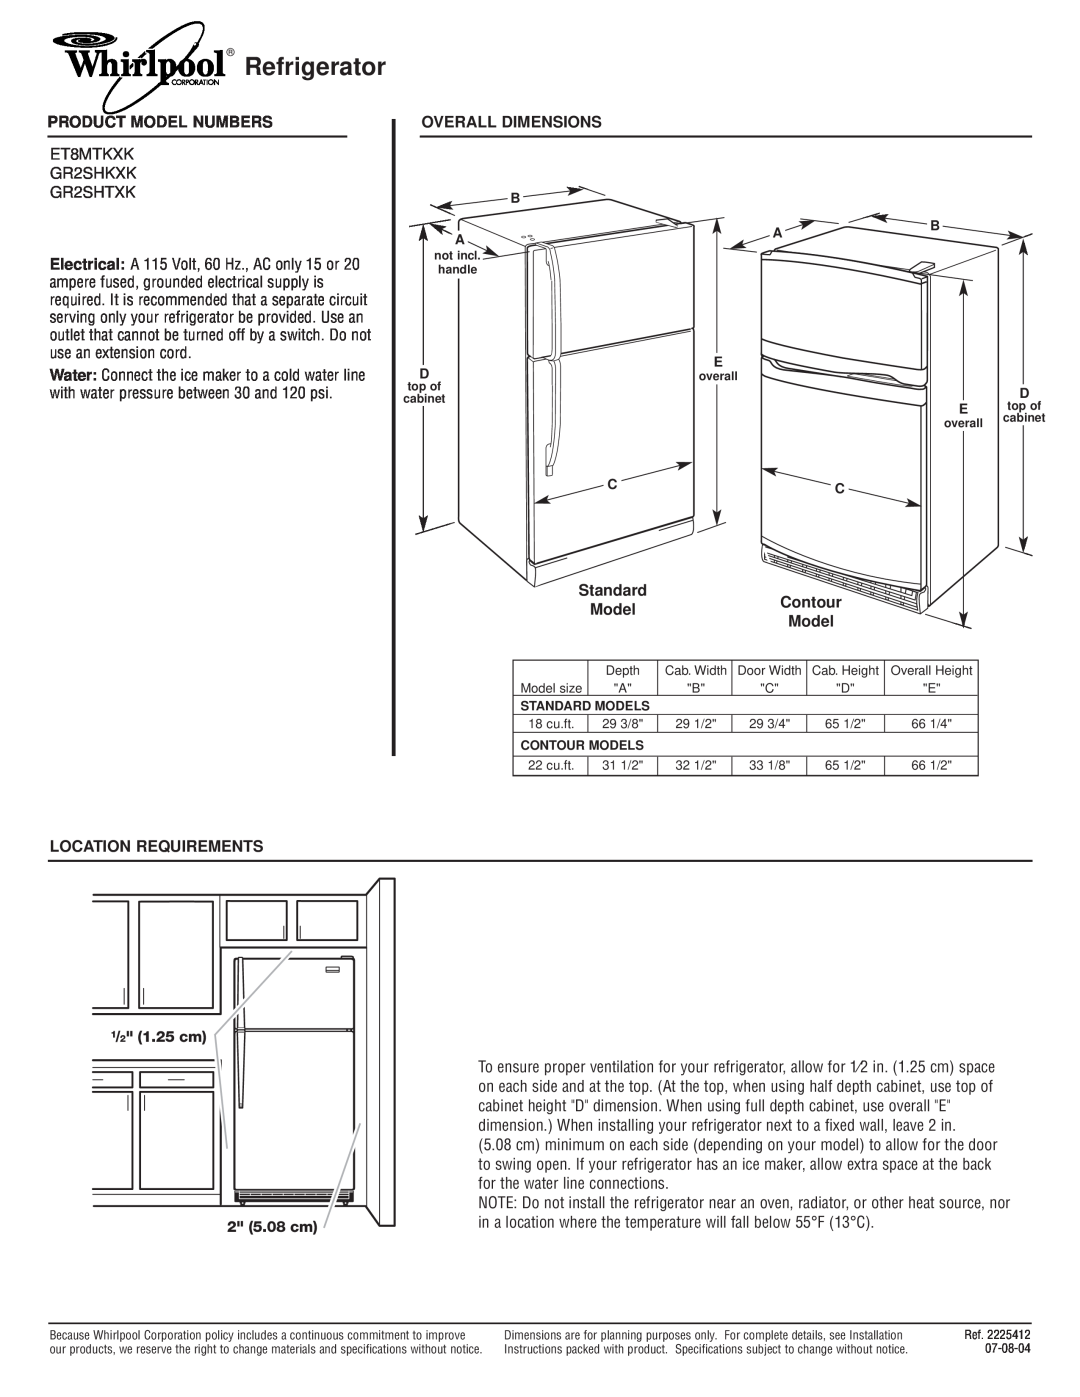 Whirlpool GR2SHKXK, ET8MTKXK dimensions Refrigerator, Product Model Numbers, Overall Dimensions, Standard, Contour 